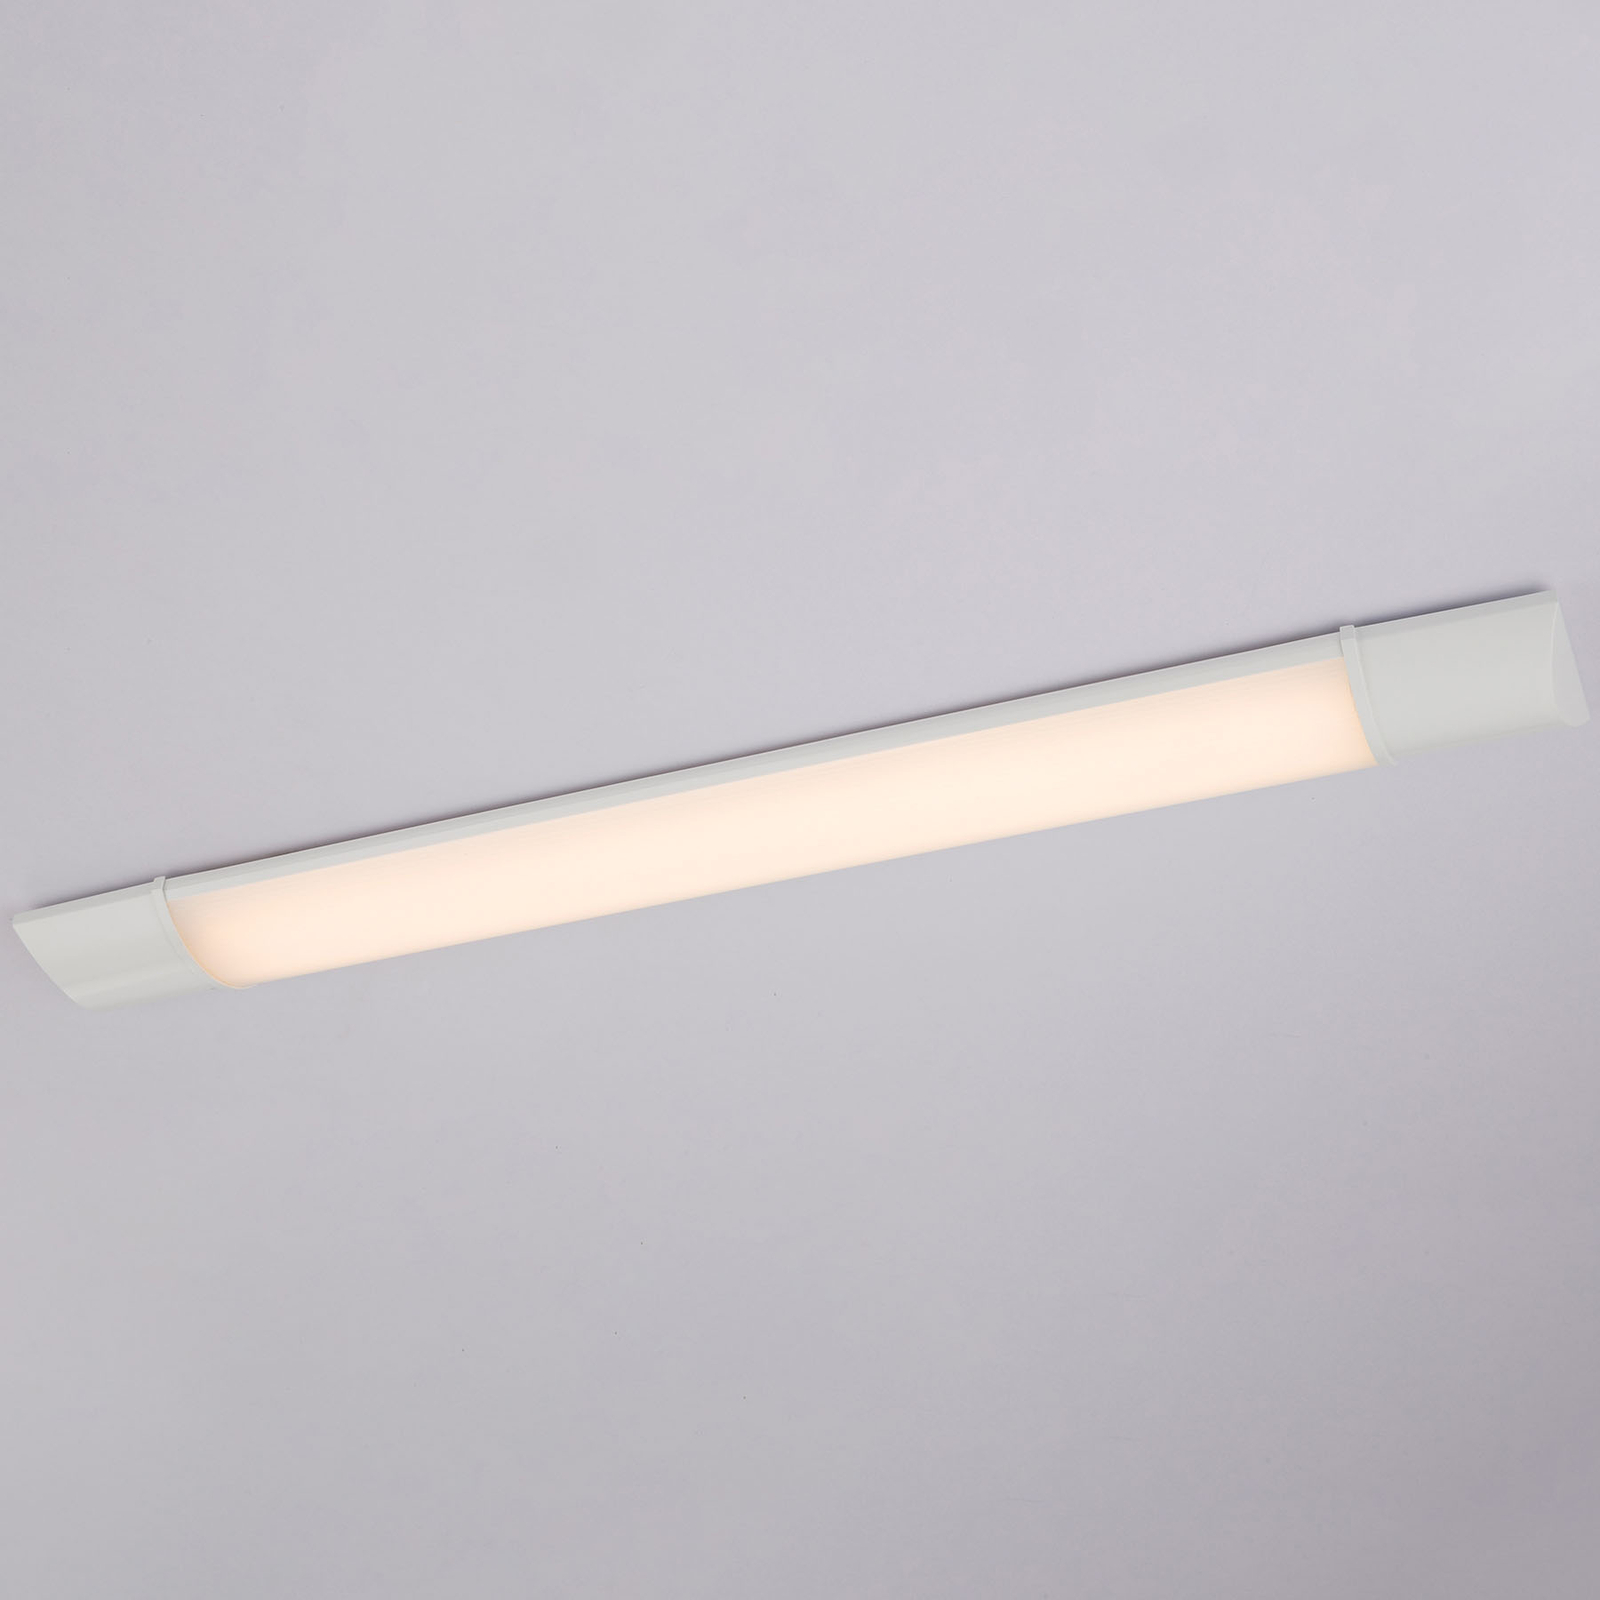 LED underskapsbelysning Obara, IP20, 60 cm lang